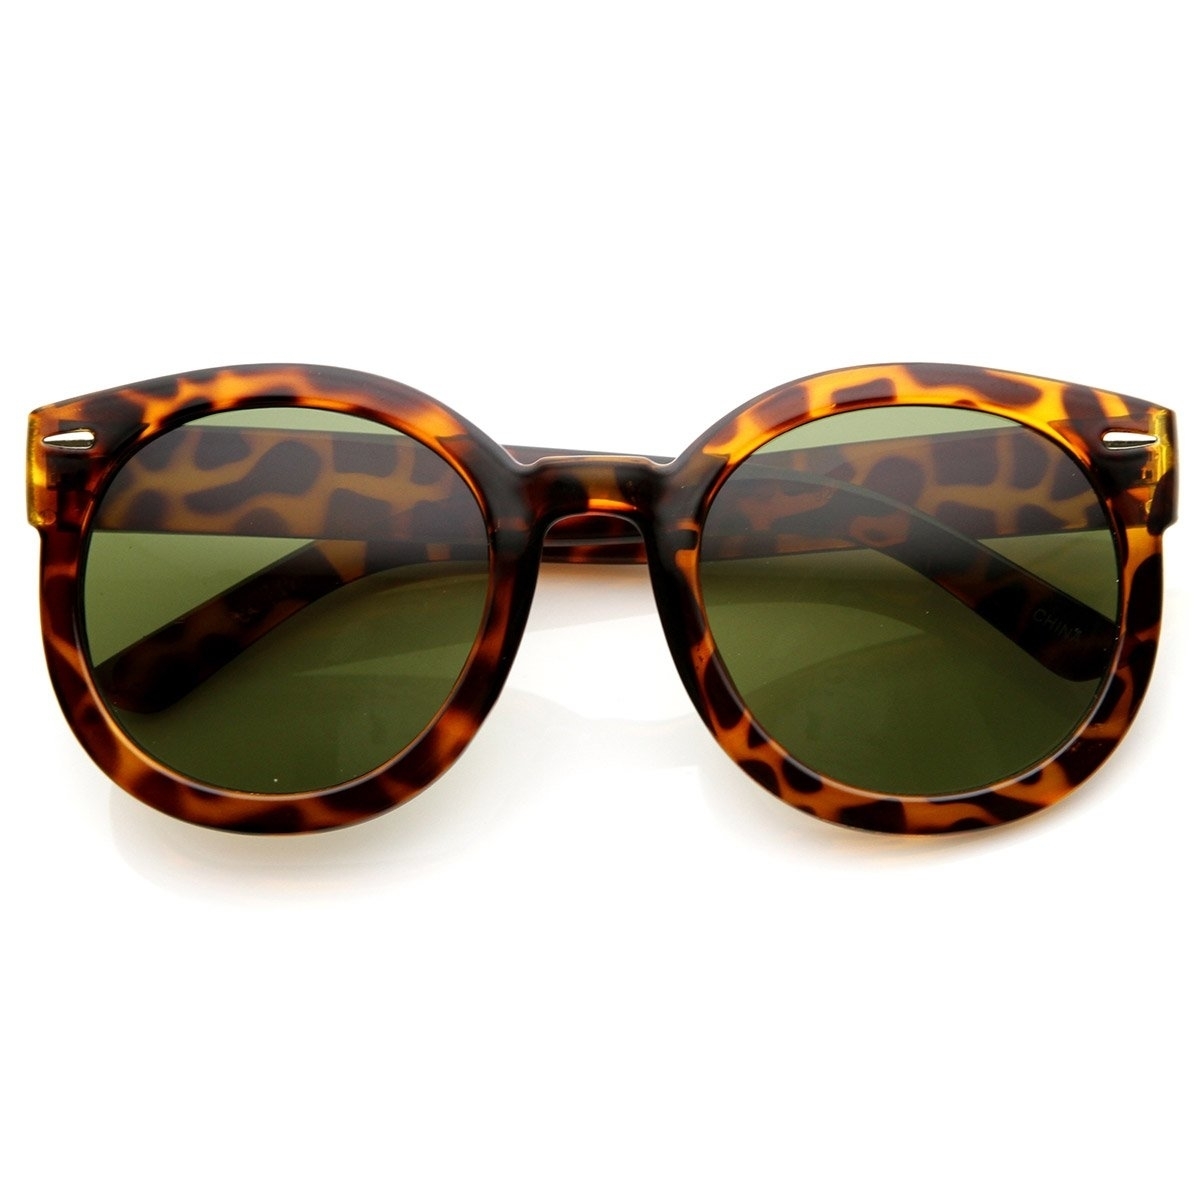 Womens Plastic Sunglasses Oversized Retro Style With Metal Rivets - Havana Amber